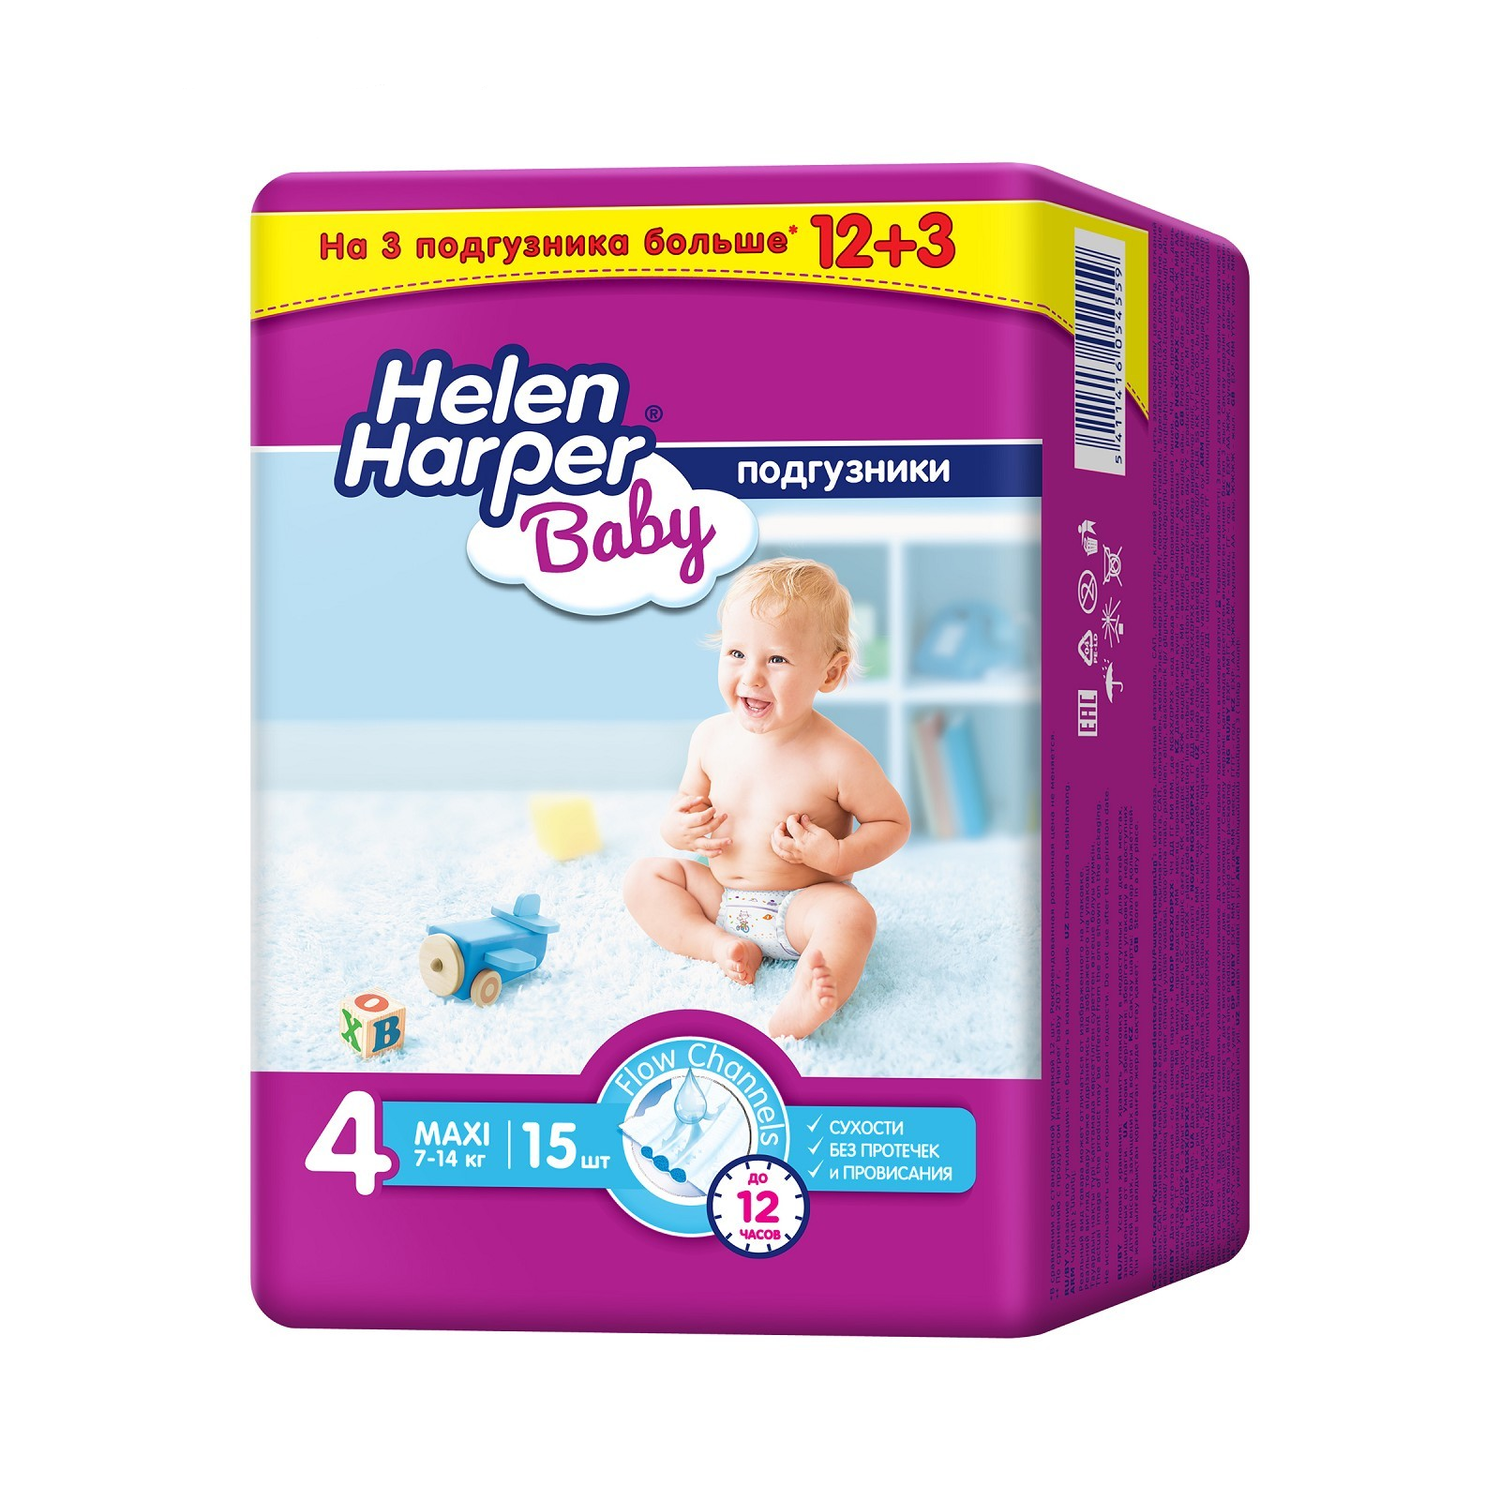 Подгузники Helen Harper Baby размер 4 Maxi 15 шт - фото 1